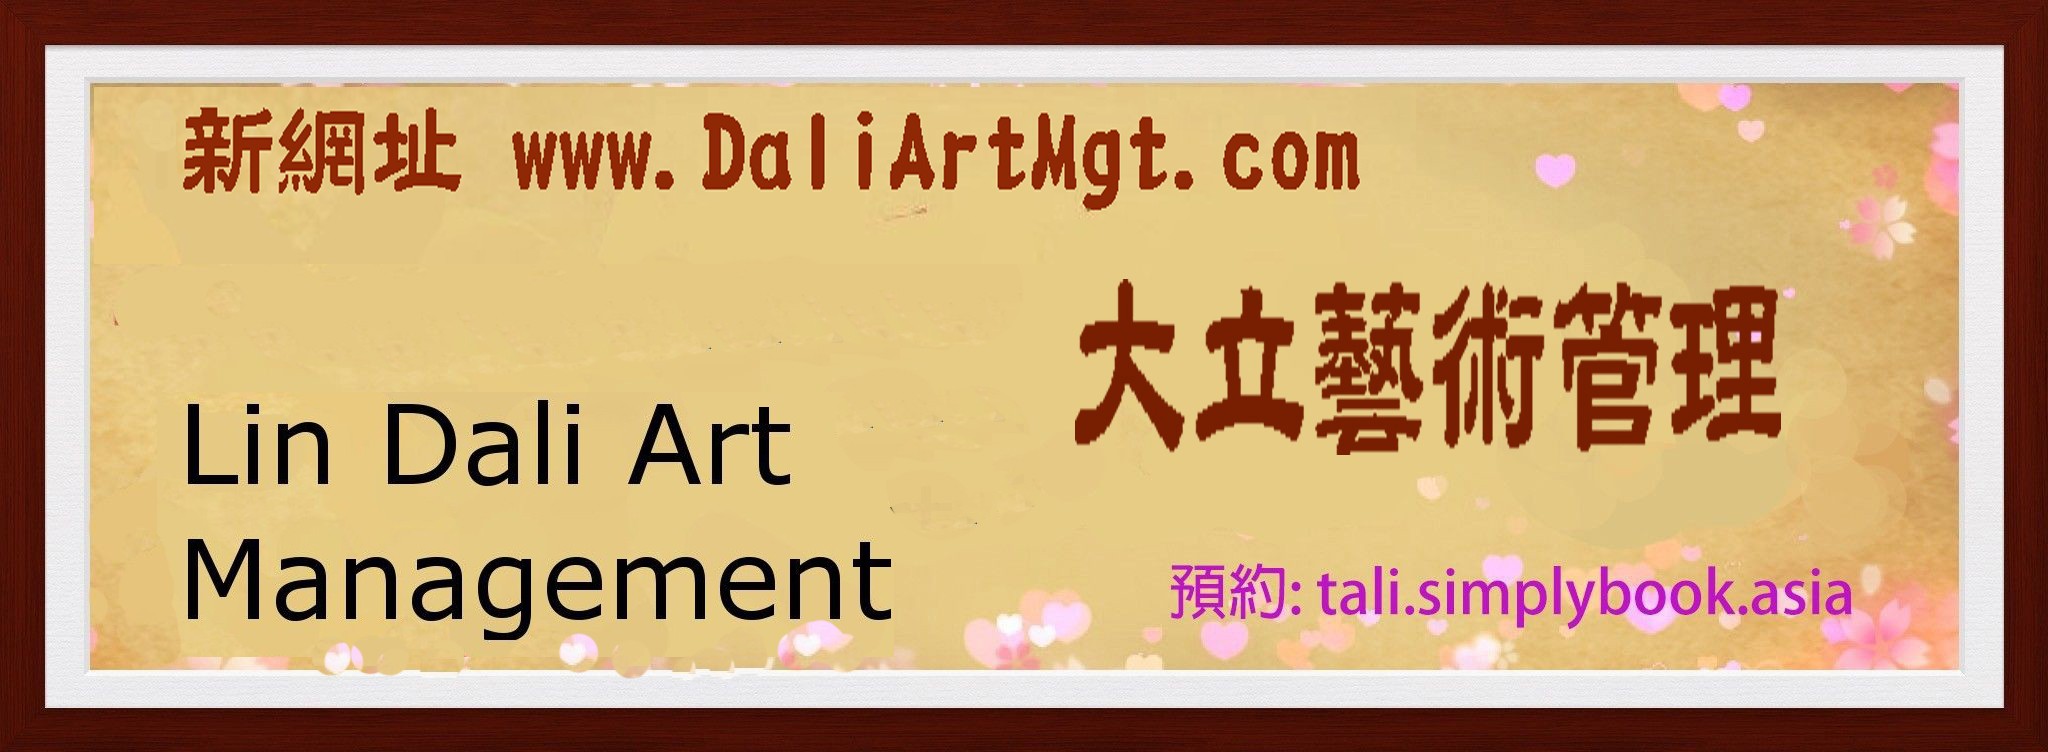 Lin Dali Art Management